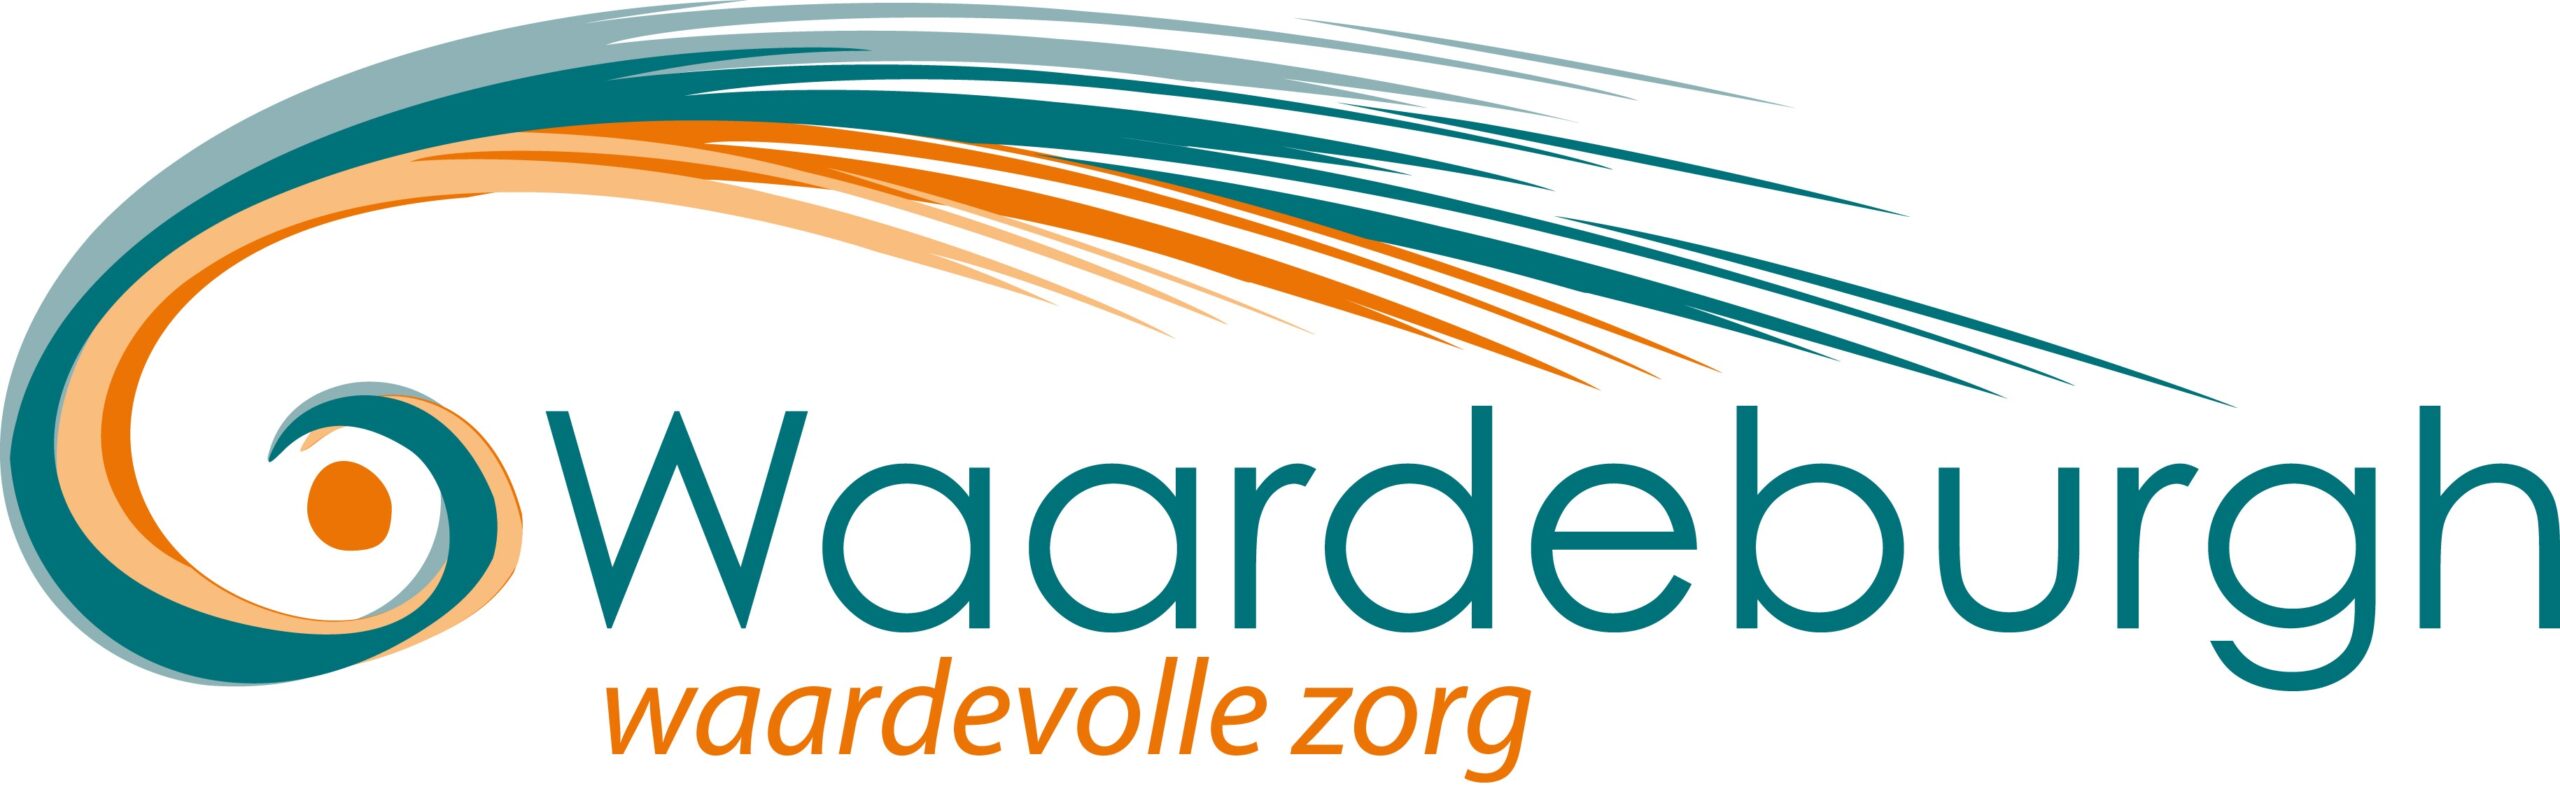 Logo Waardenburgh 2020